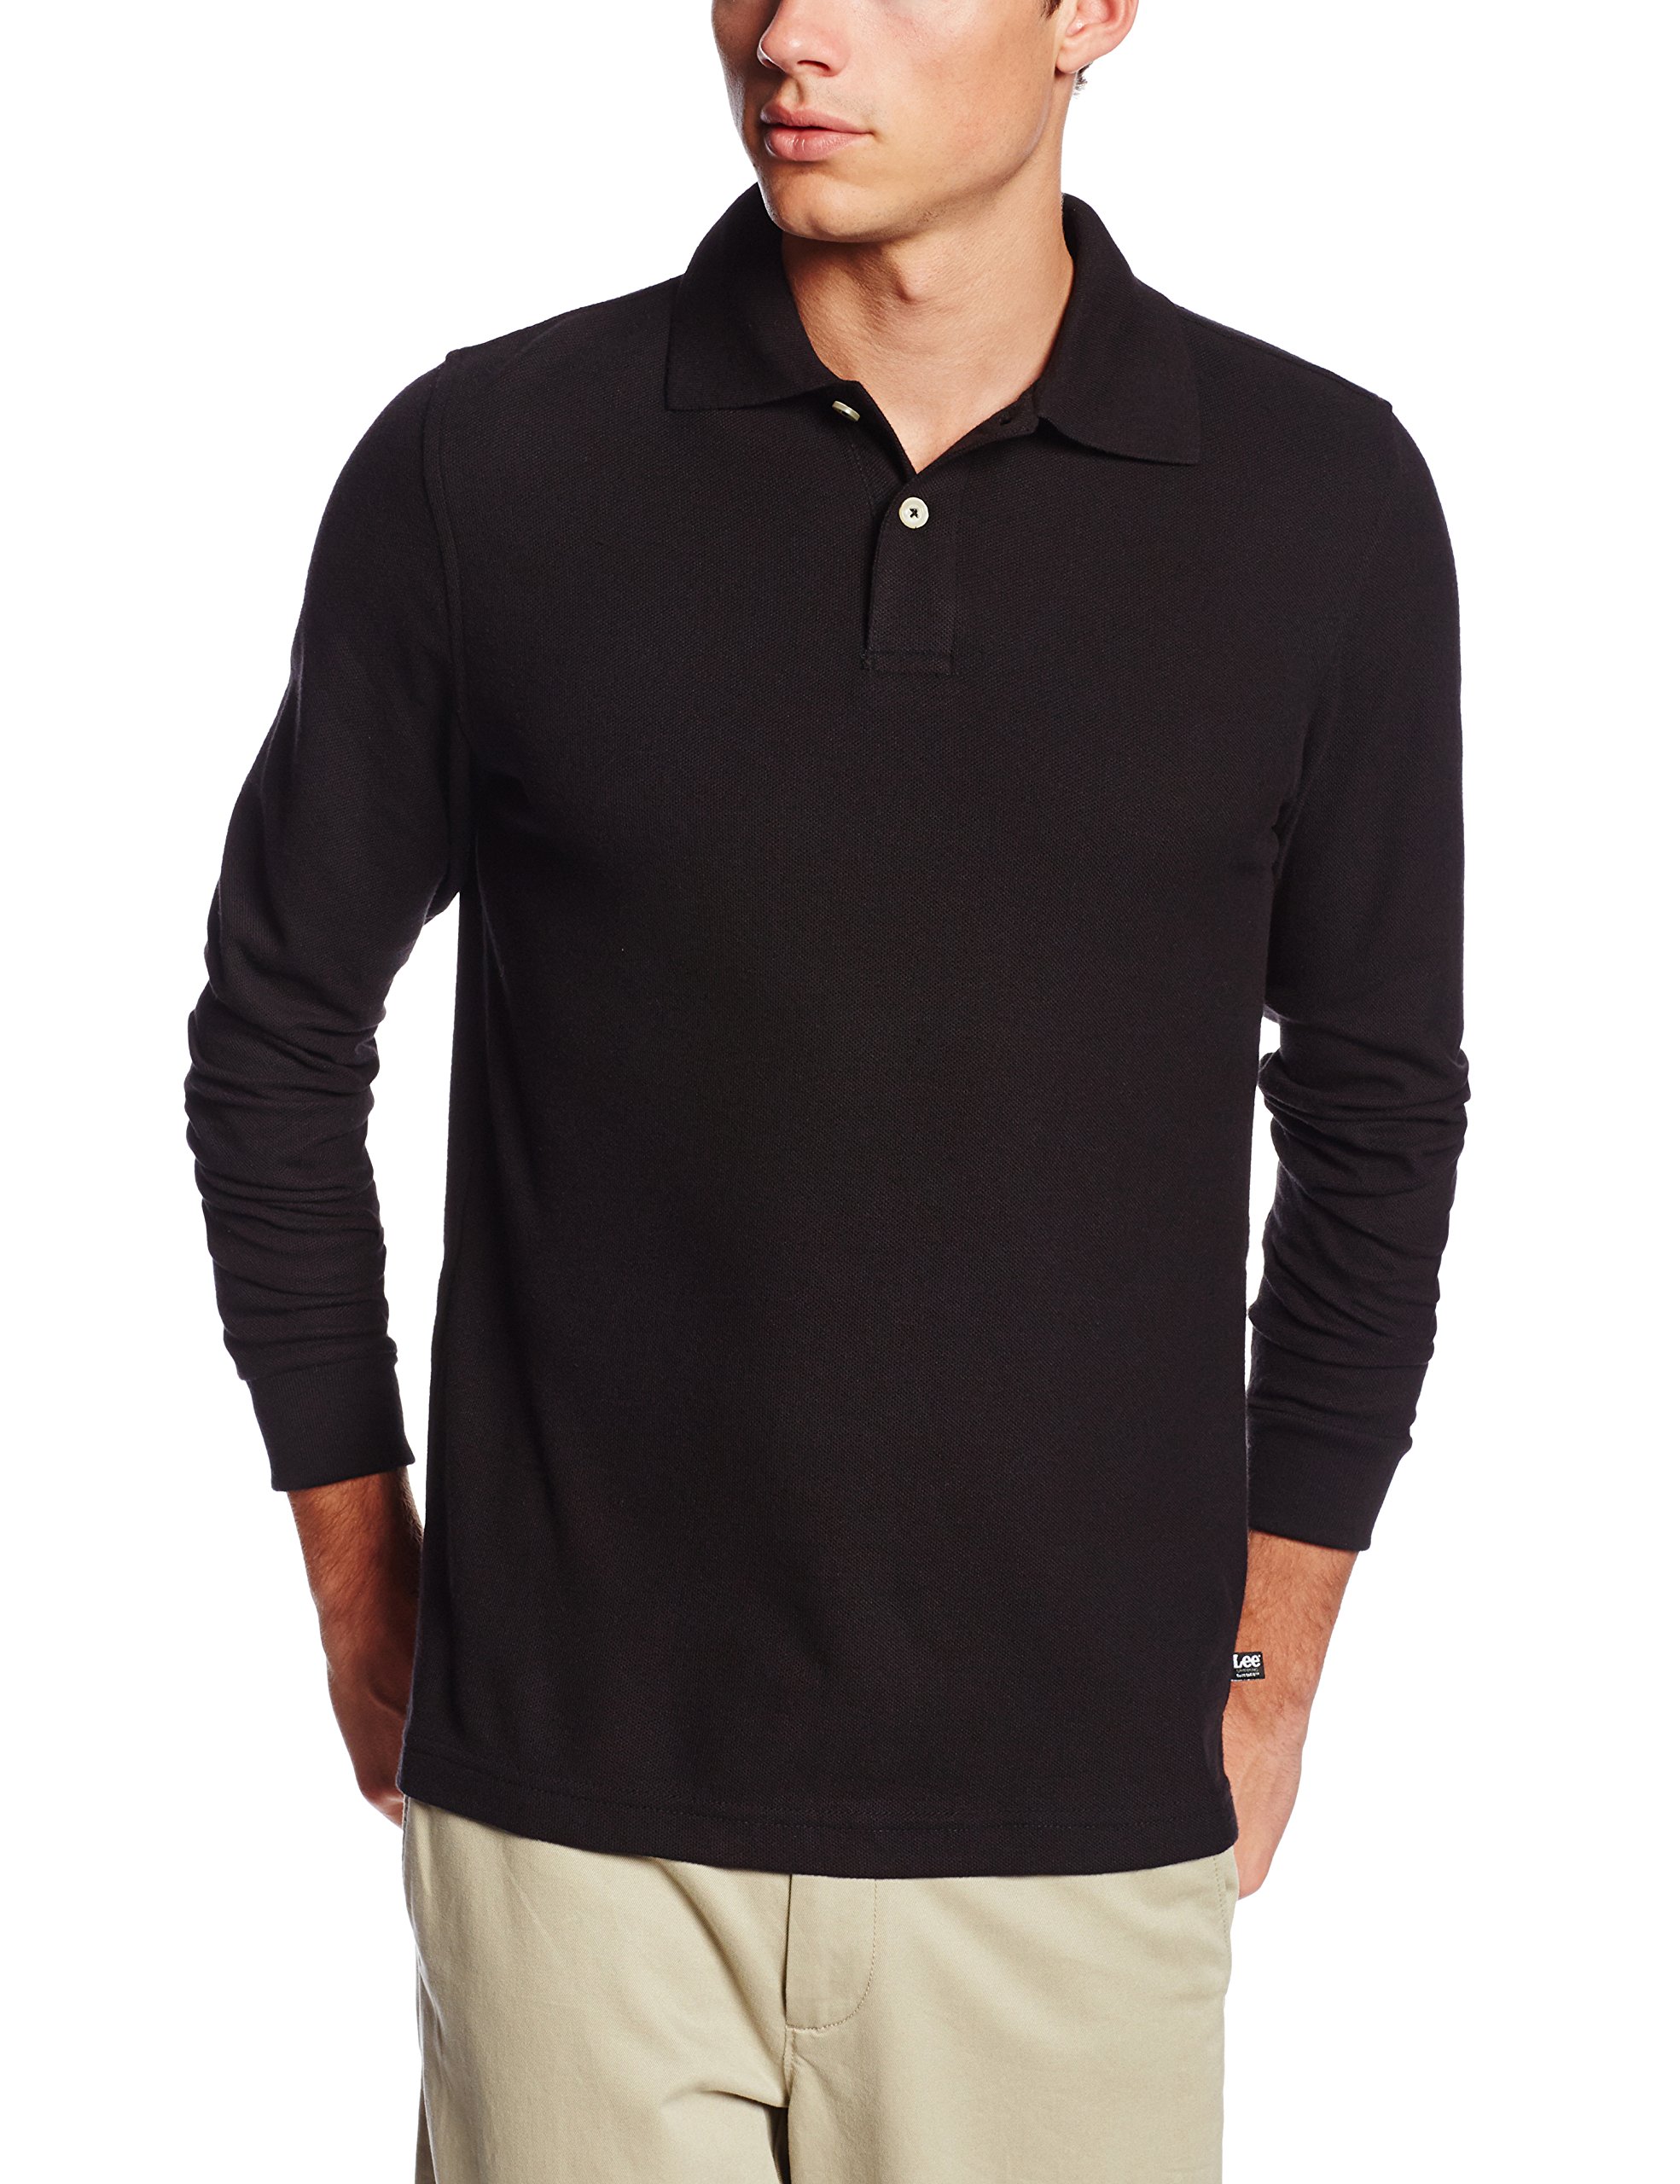 Lee Uniforms Men's Modern Fit Long Sleeve Polo Shirt (Black, White, Navy)